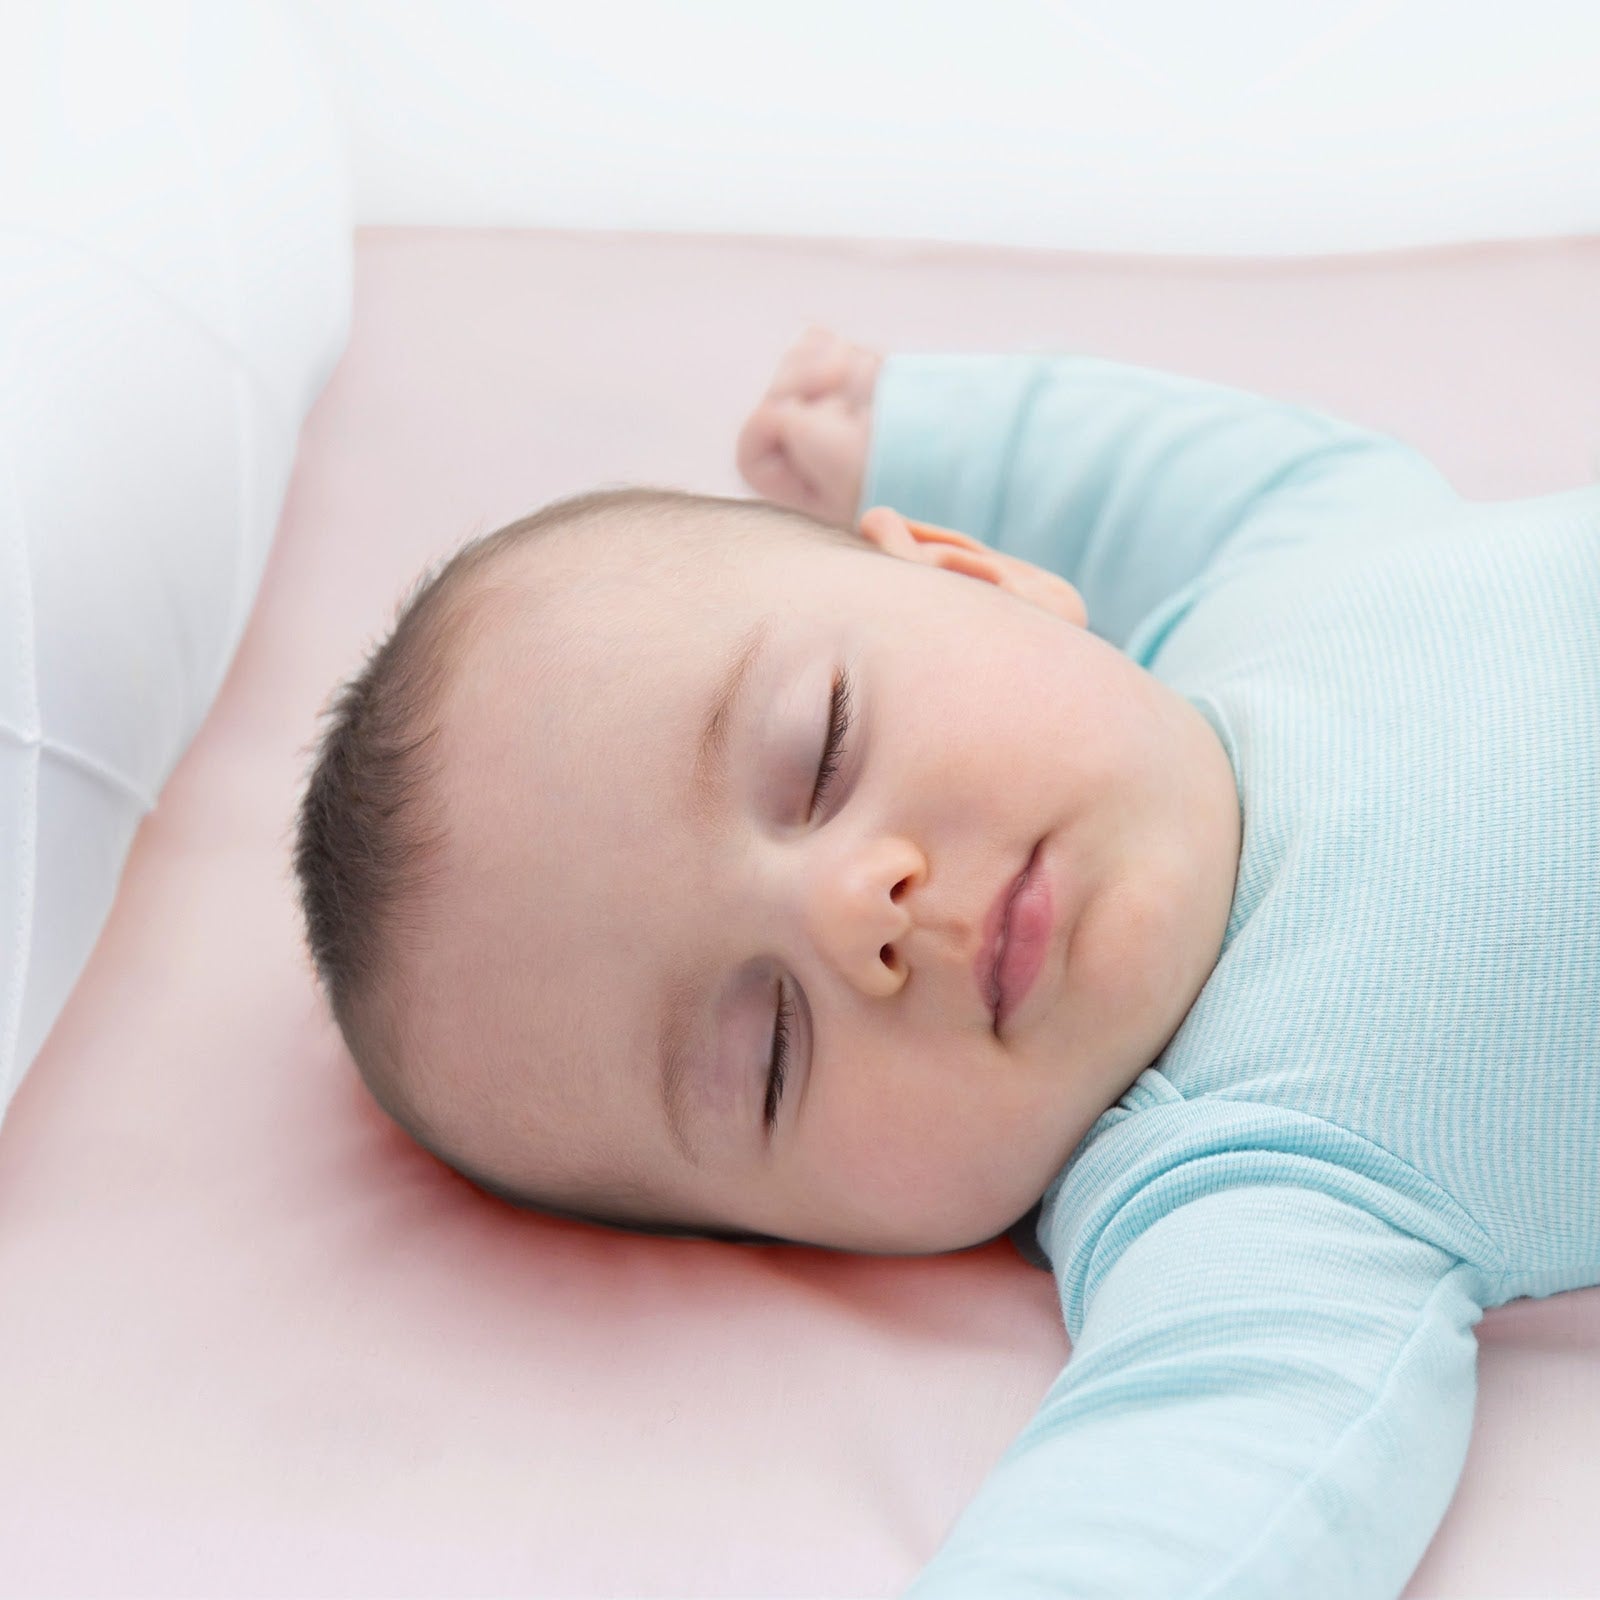 7 Ways to Help Your Child Get a Good Night’s Sleep